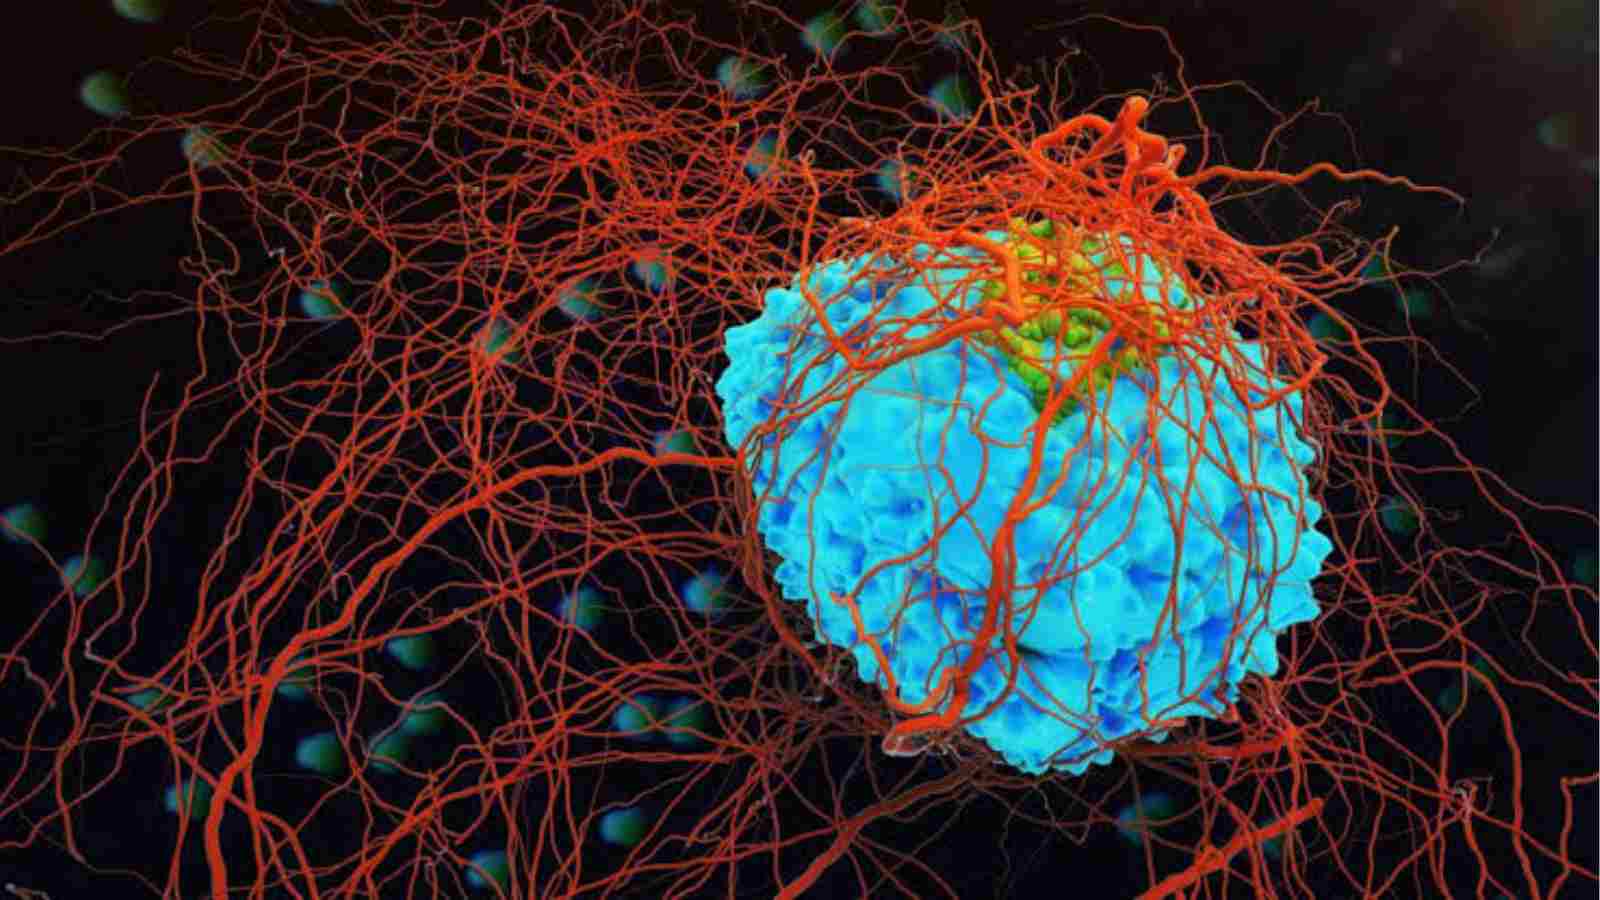 ERX- 41 kills even the resistant cancer cells